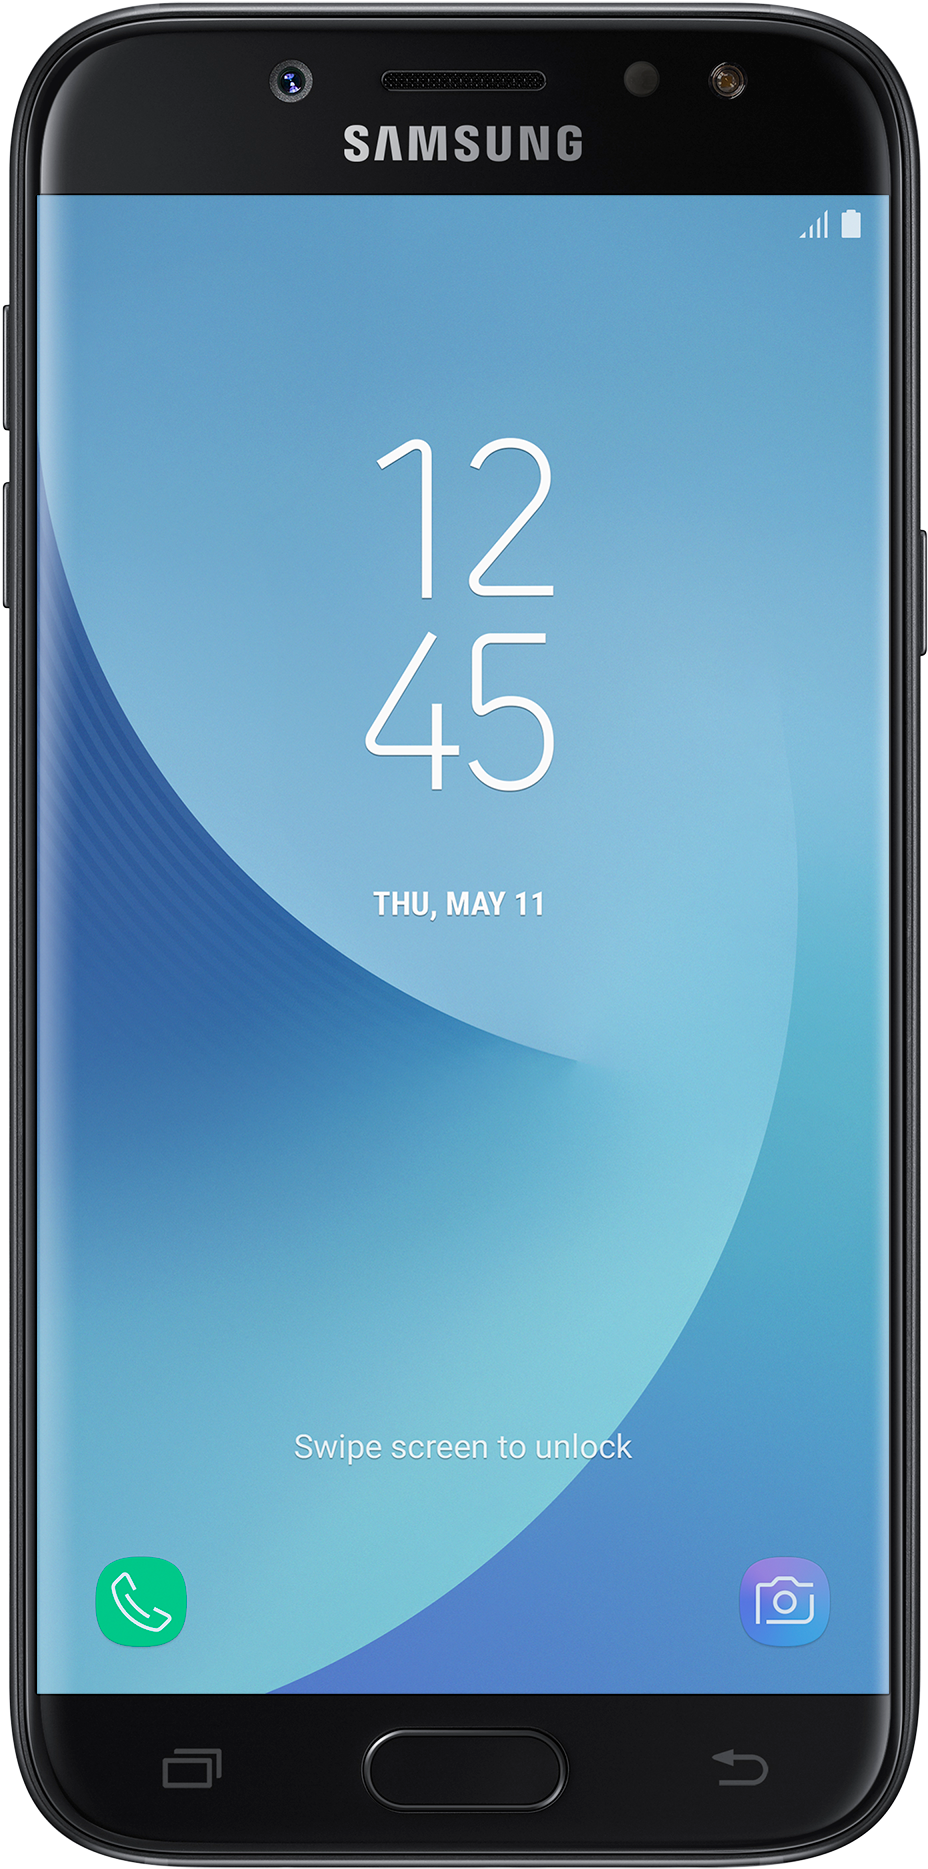 Samsung Smartphone Lockscreen Display PNG